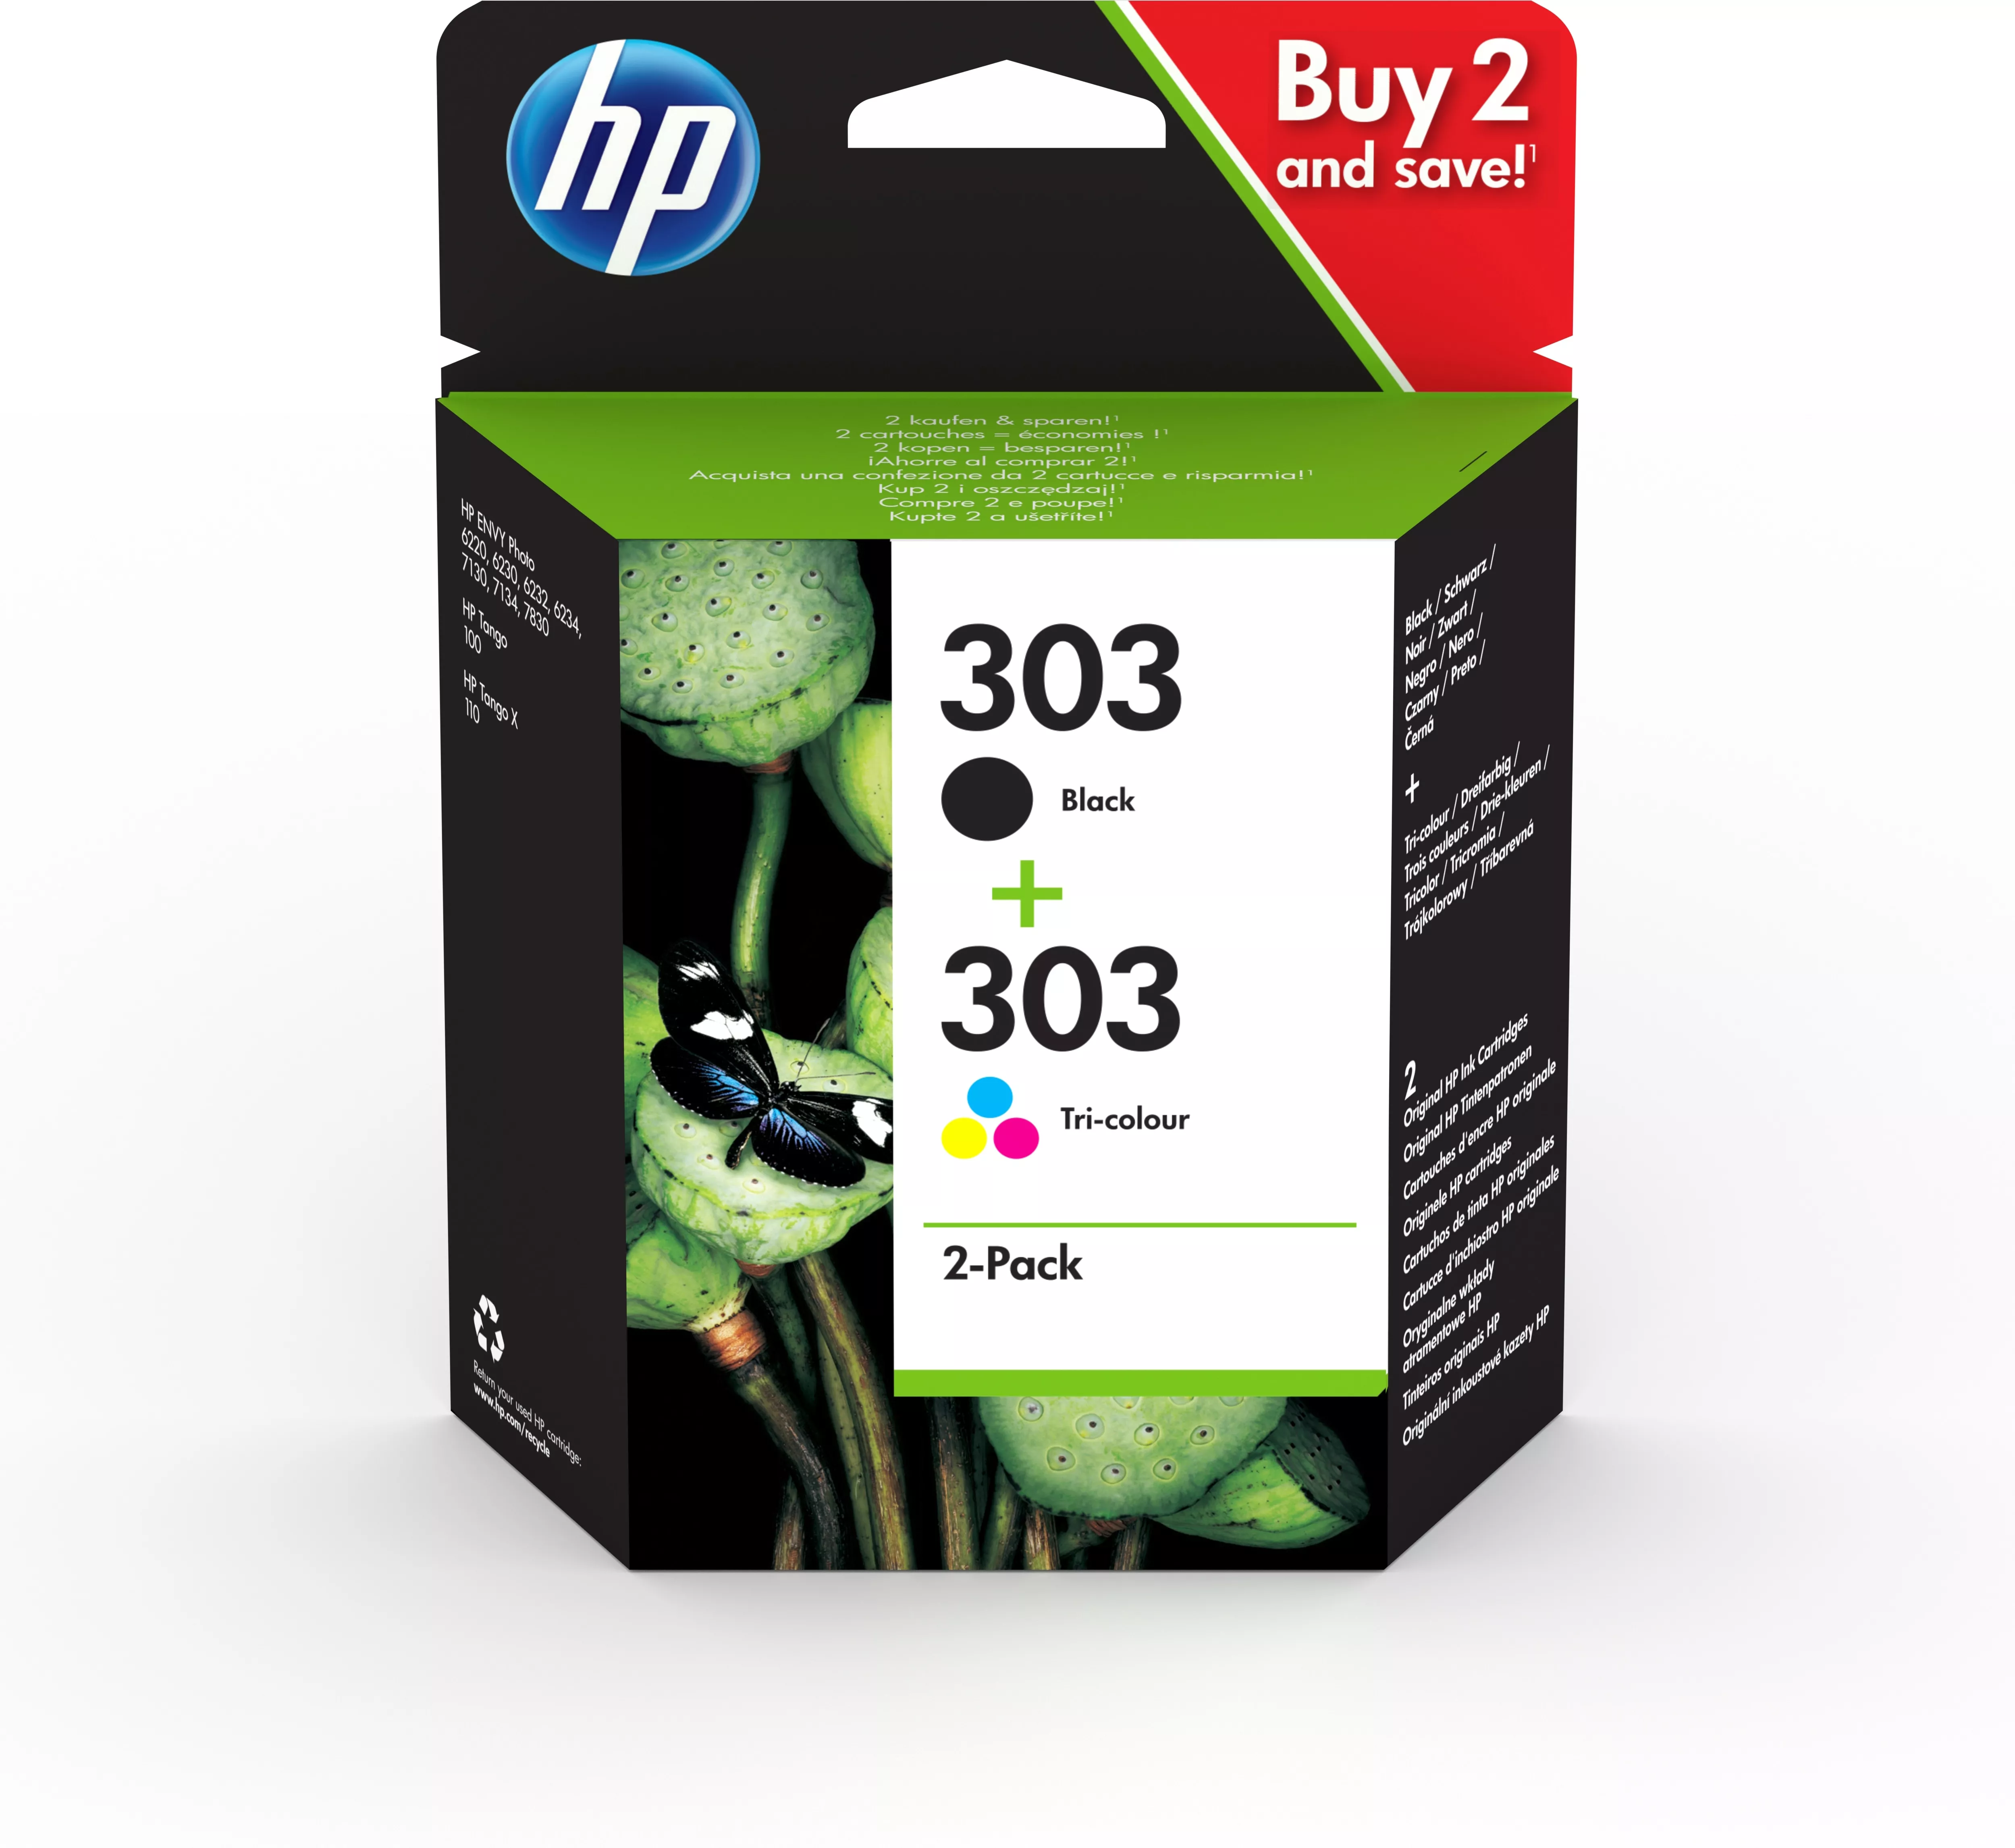 Achat HP 303 2-pack Black/Tri-color Original Ink Cartridge au meilleur prix